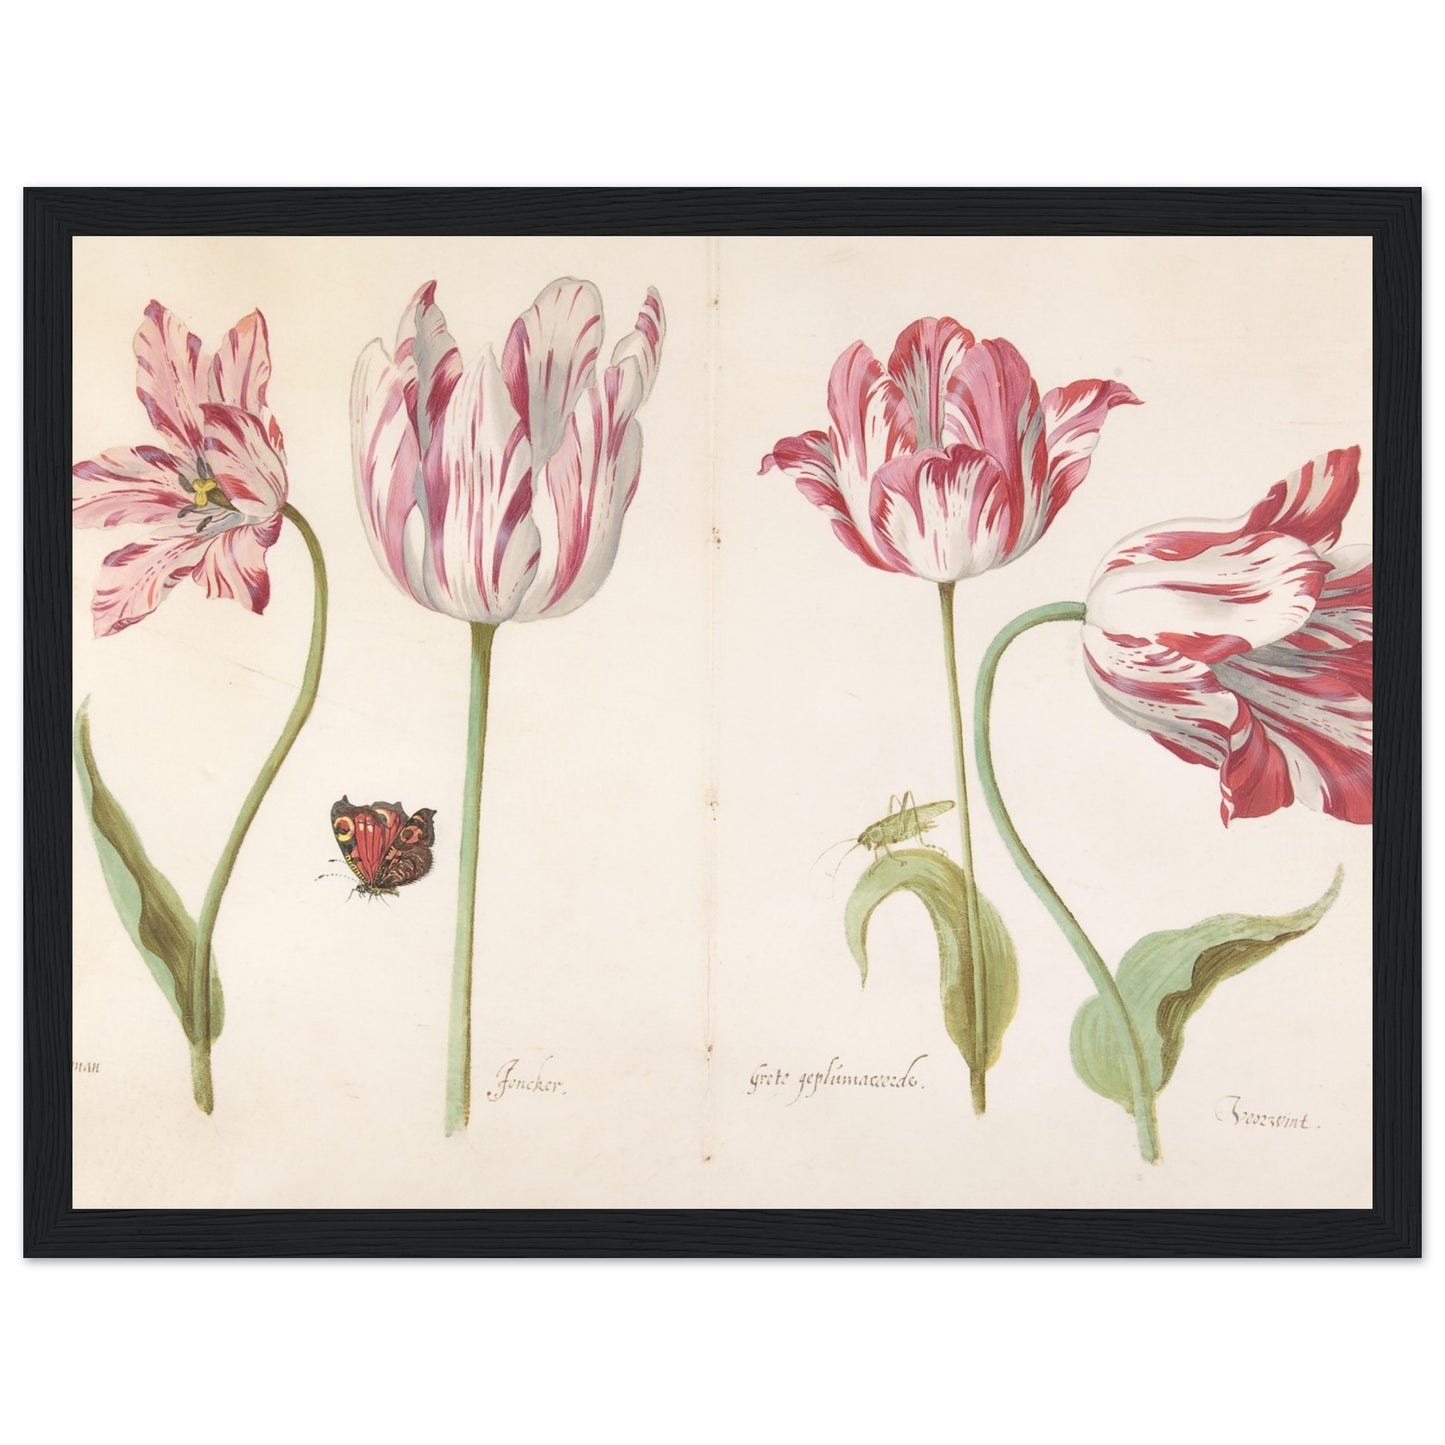 Four Tulips artwork print black frame | By Print Room Ltd